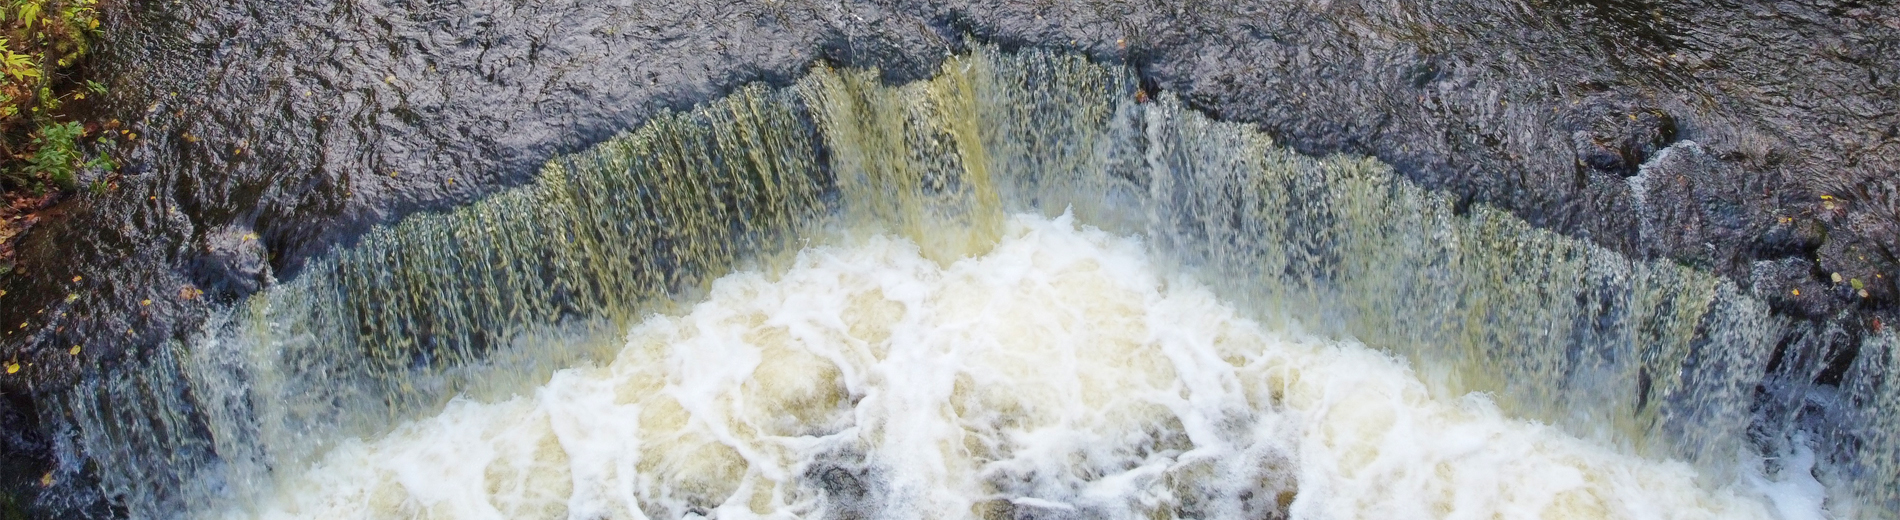 Waterfalls of Vasaristi and Nõmmeveski